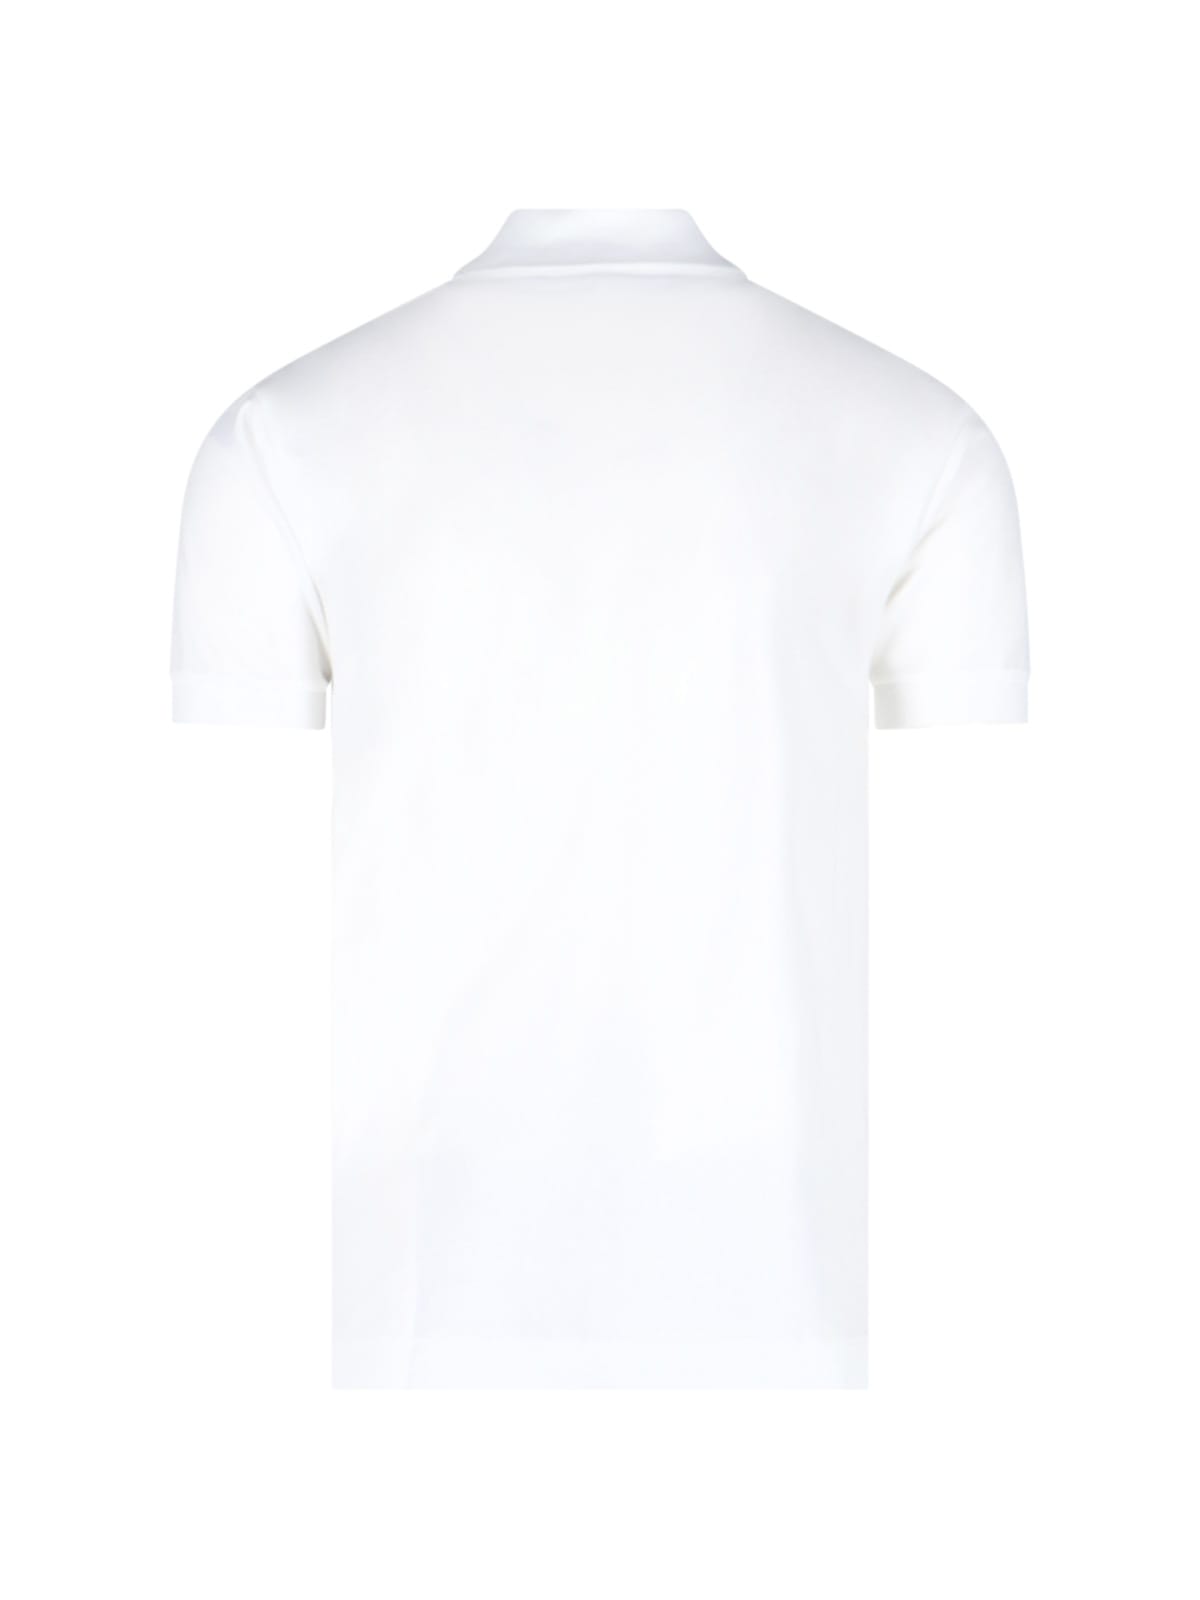 Shop Lacoste Classic Design Polo Shirt